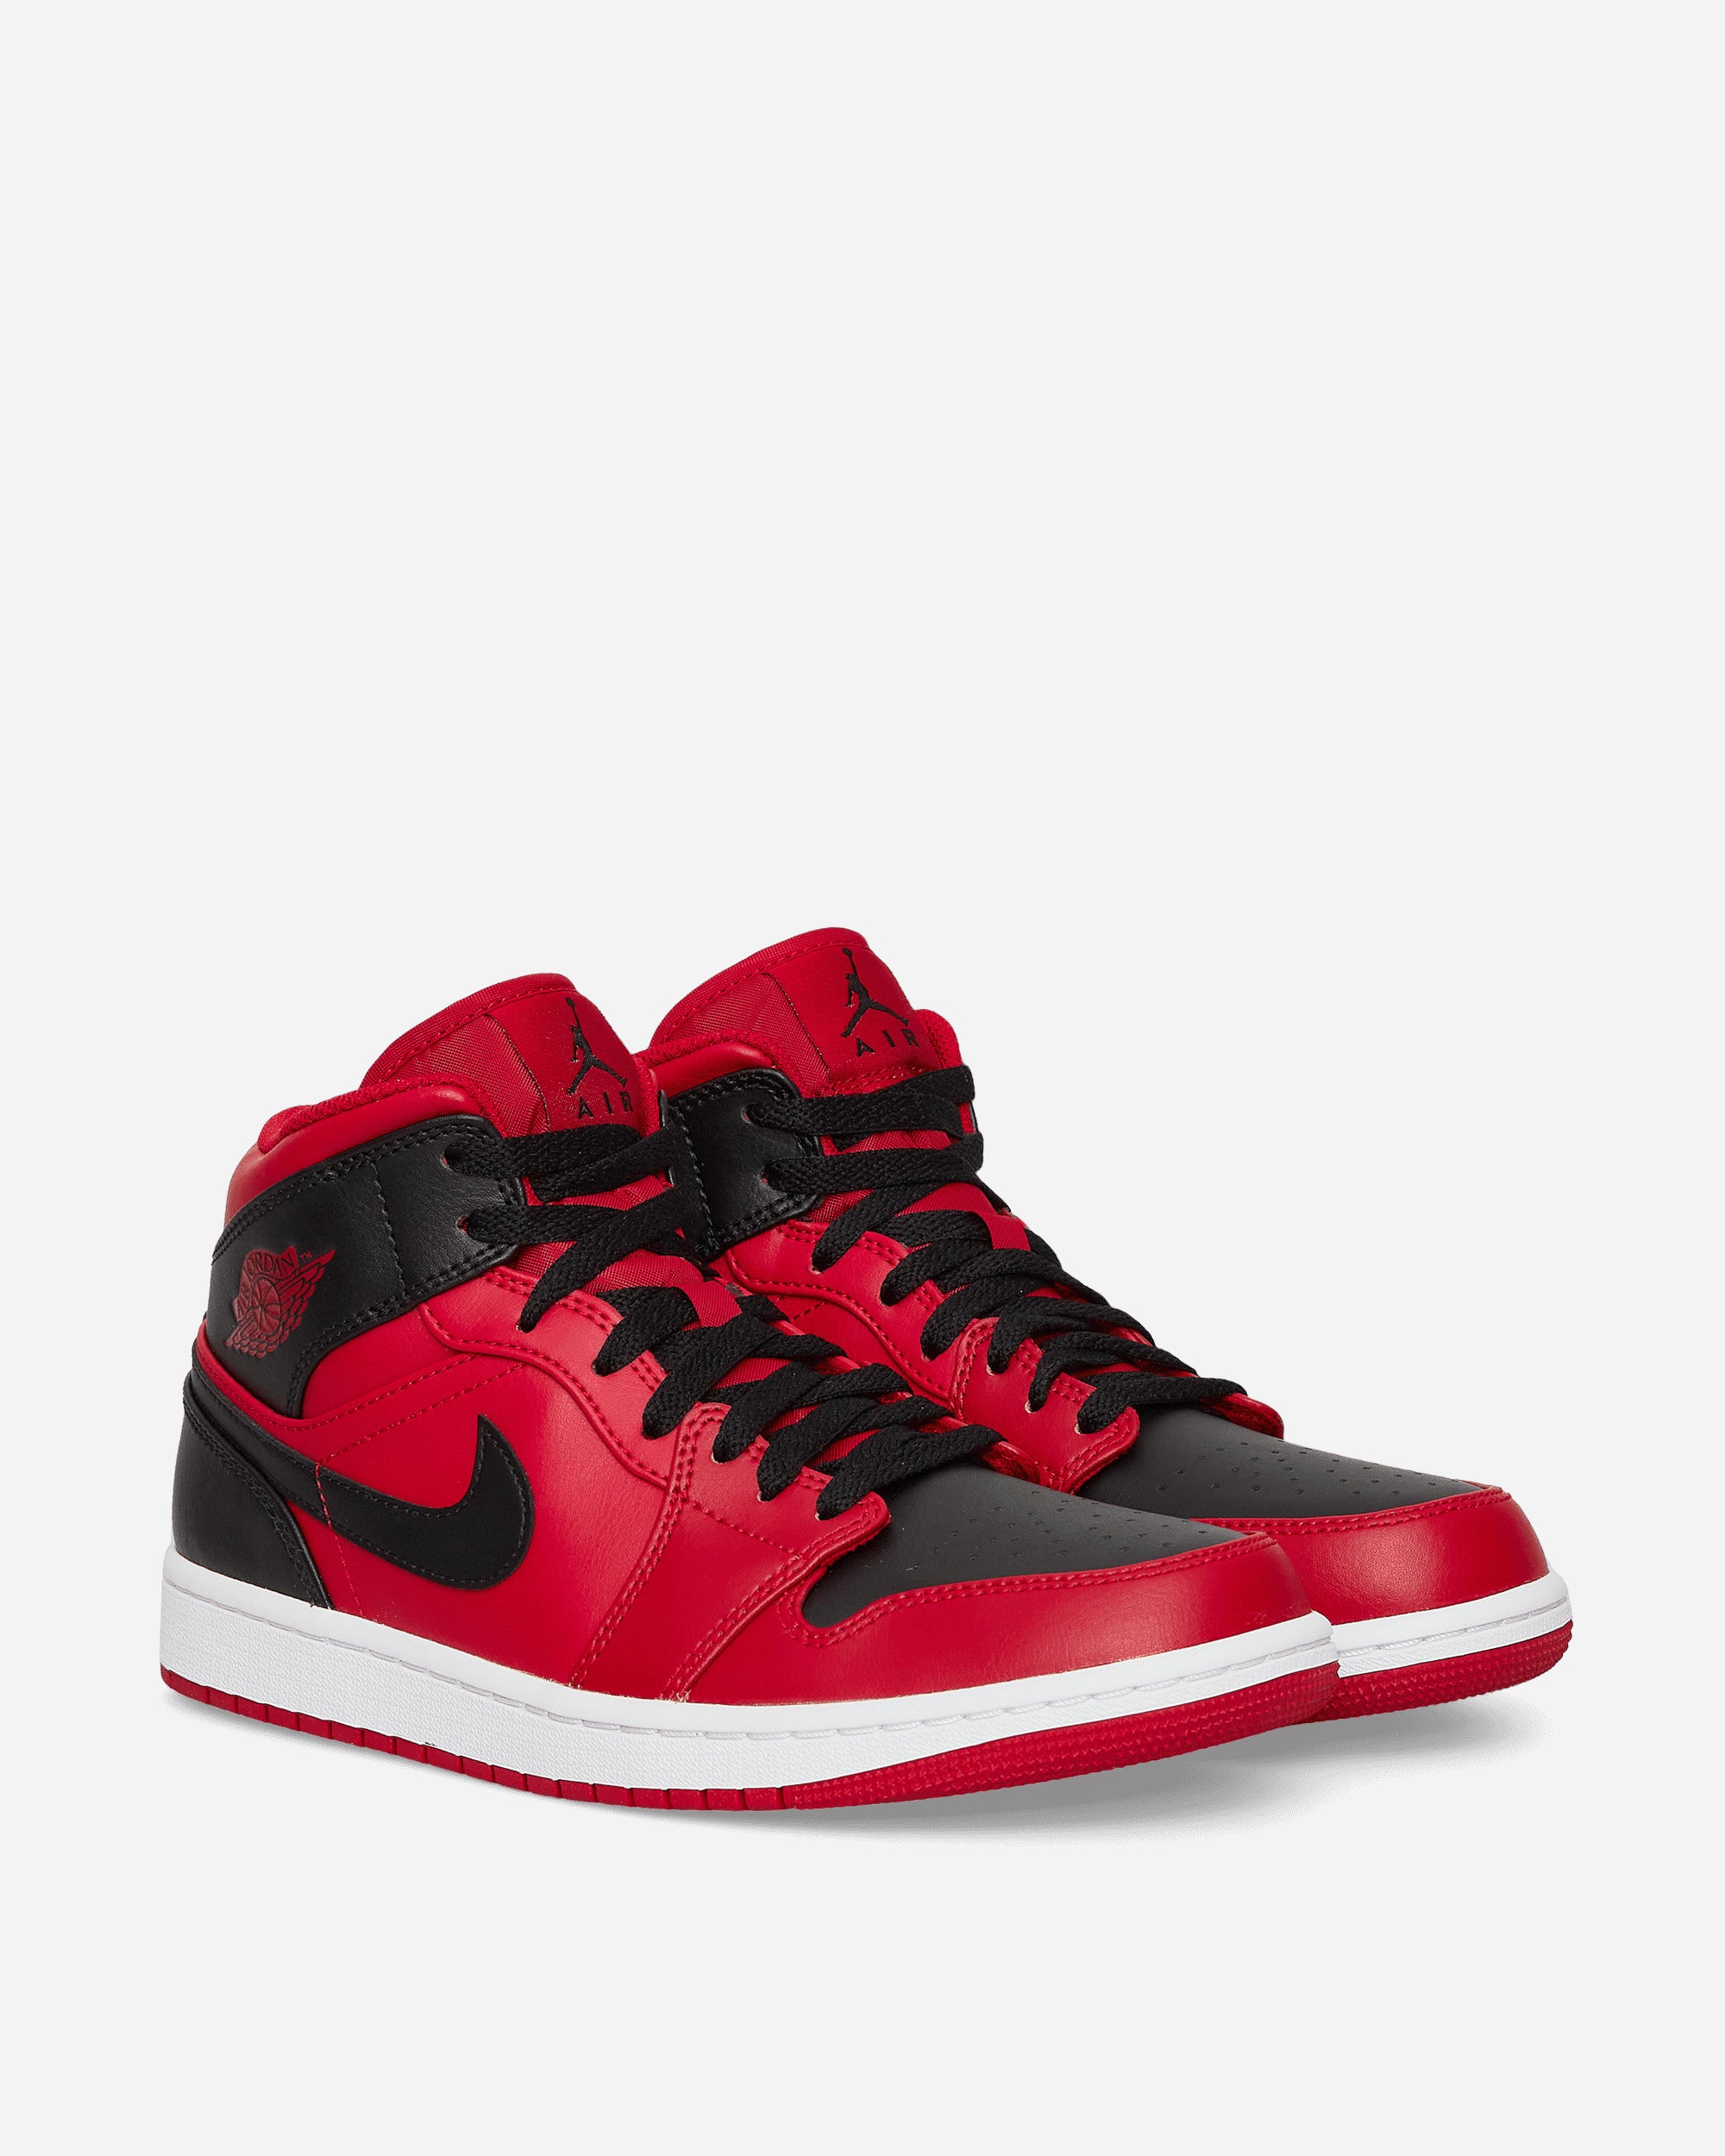 omvang Beperken aanbidden Nike Jordan Air Jordan 1 Mid Sneakers Black - Slam Jam Official Store